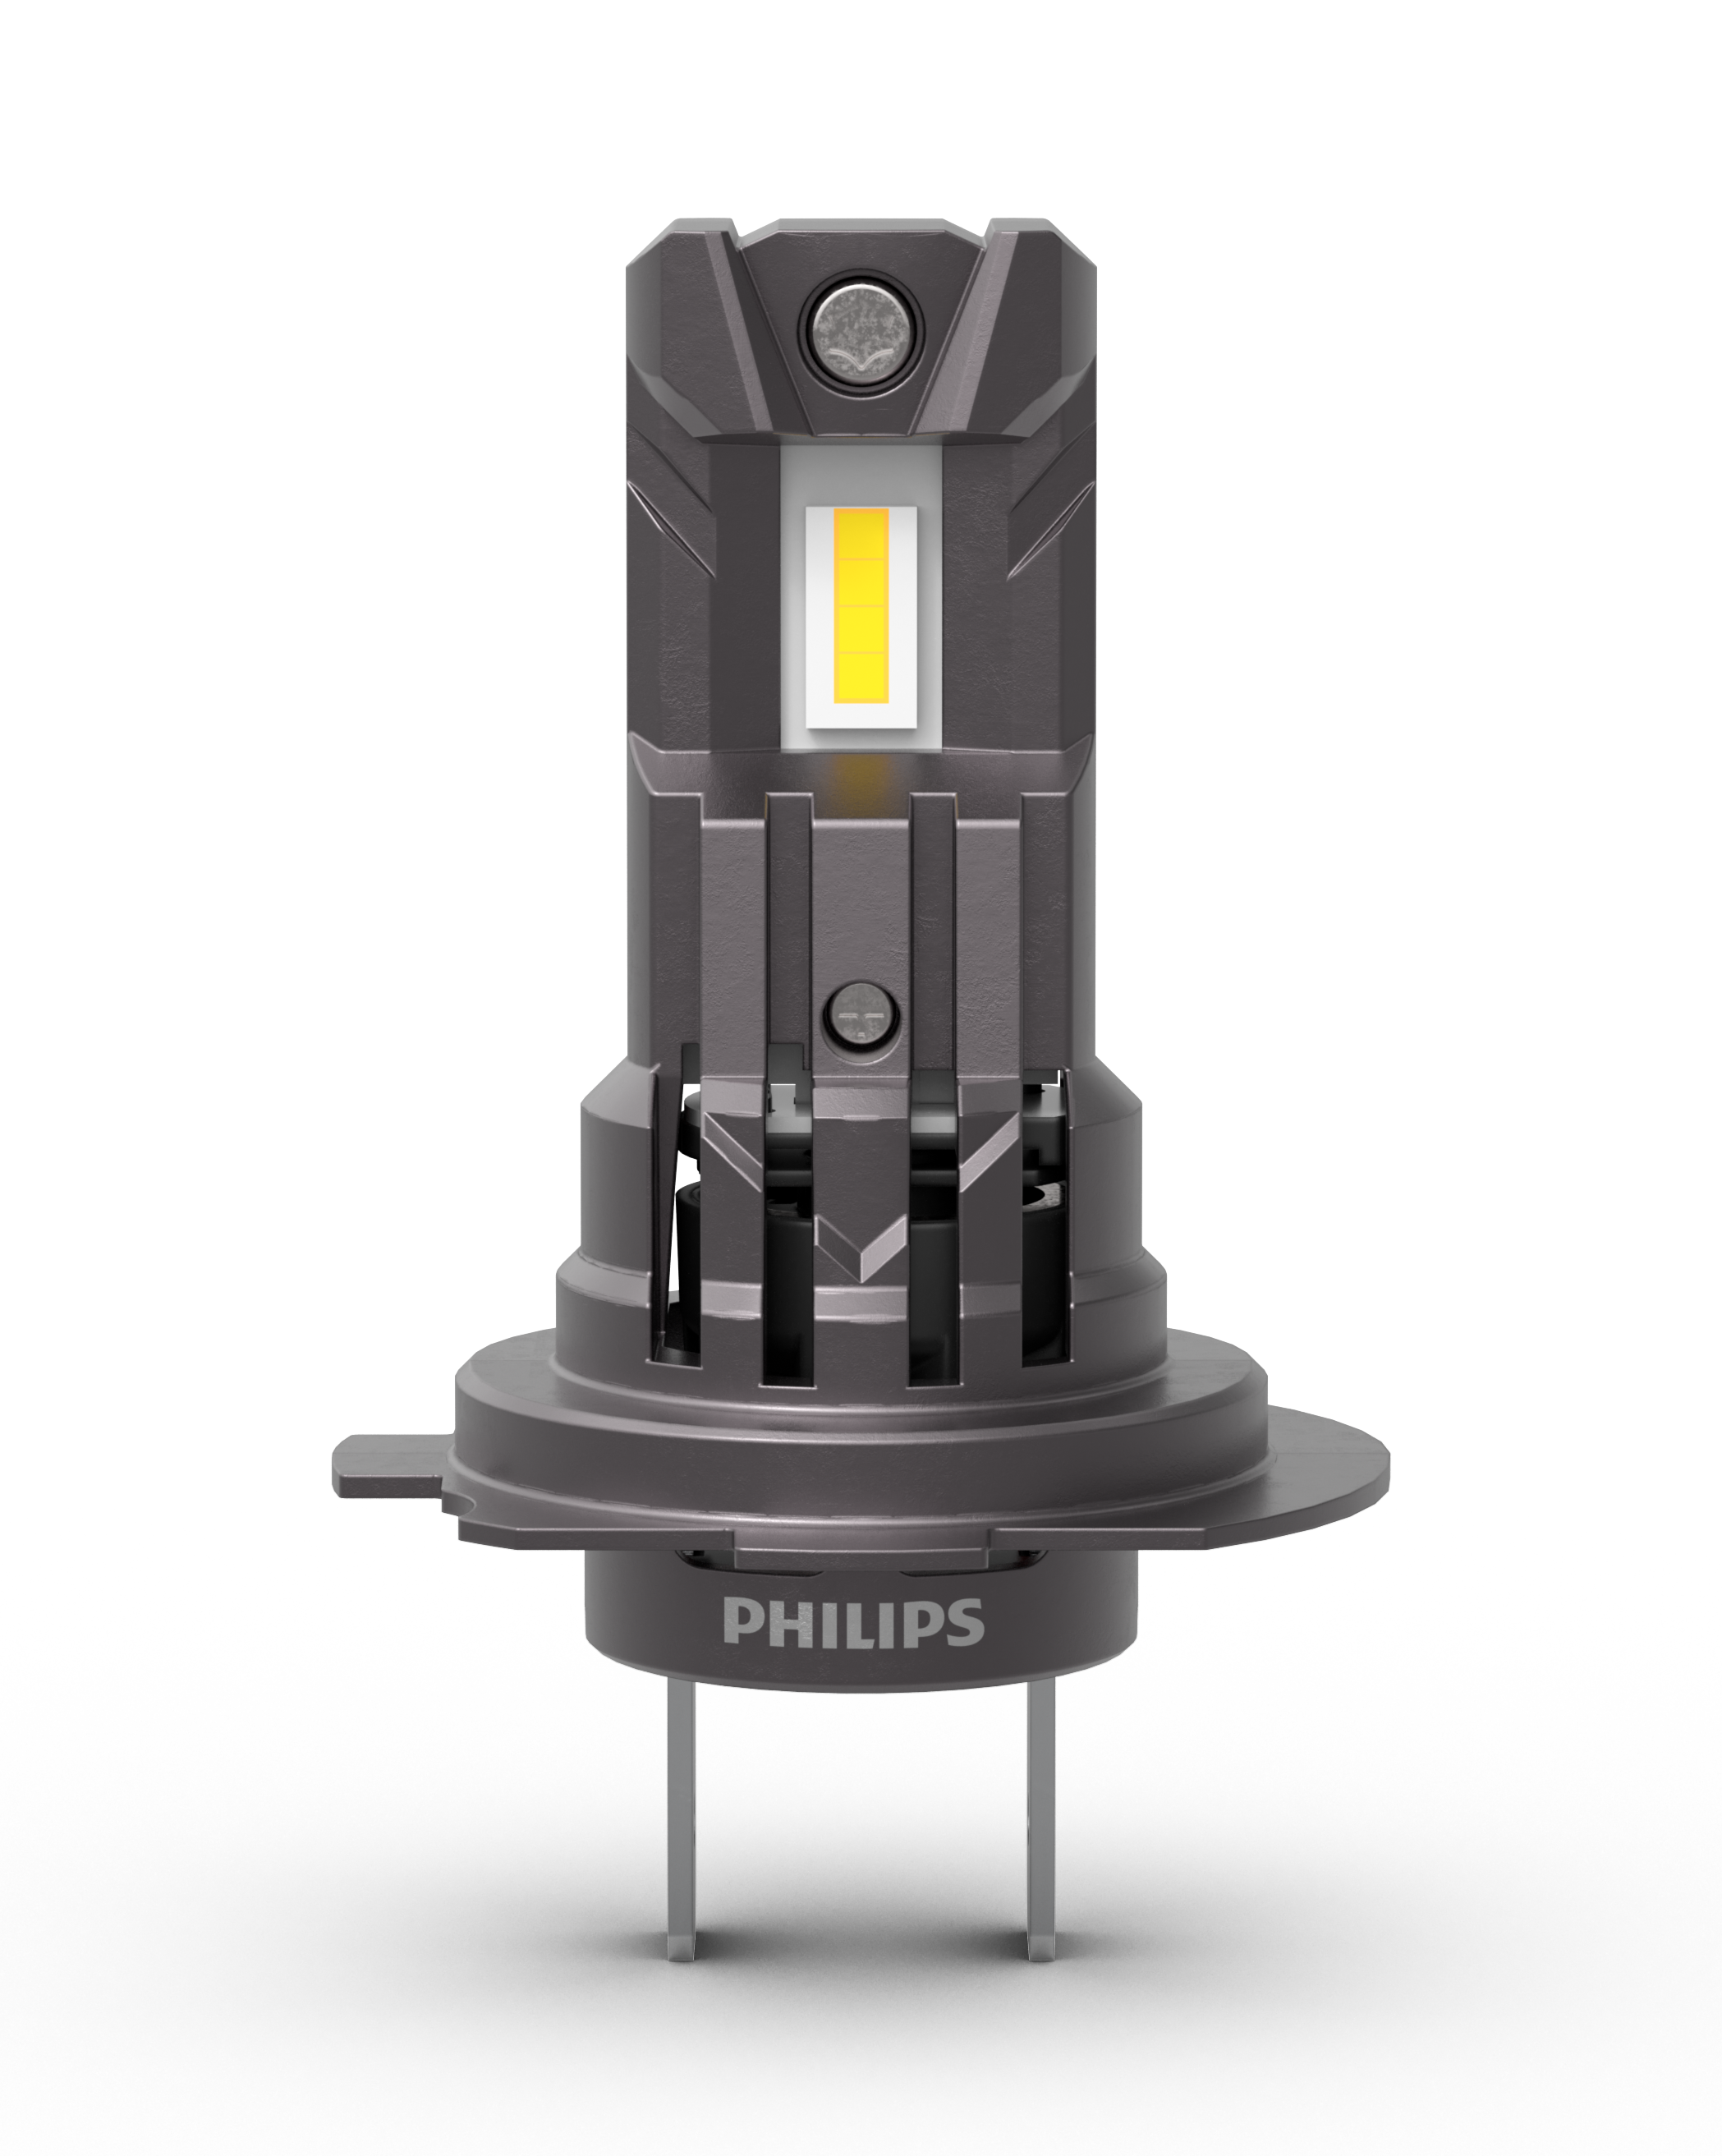 Philips Ultinon Access H4 LED Headlights bulbs 12V - 11342U2500C2